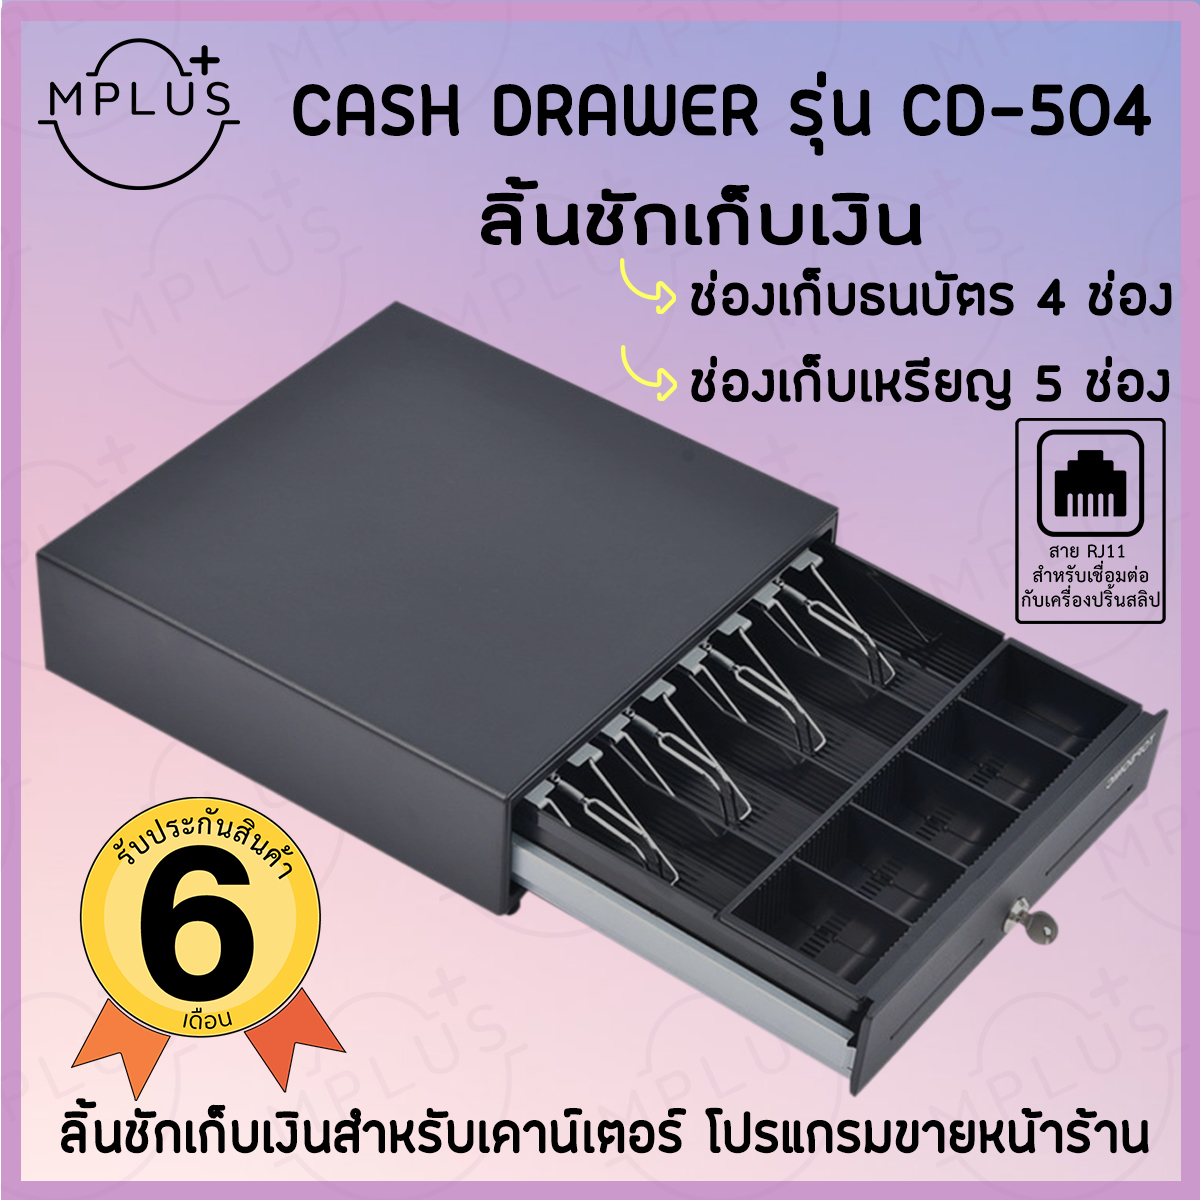 Cash Drawer ลิ้นชักเก็บเงินสำหรับเคาน์เตอร์ Cash Drawer รุ่น CD-504 เชื่อมต่อกับเครื่องพิมพ์ใบเสร็จได้ทุกรุ่นด้วย RJ11